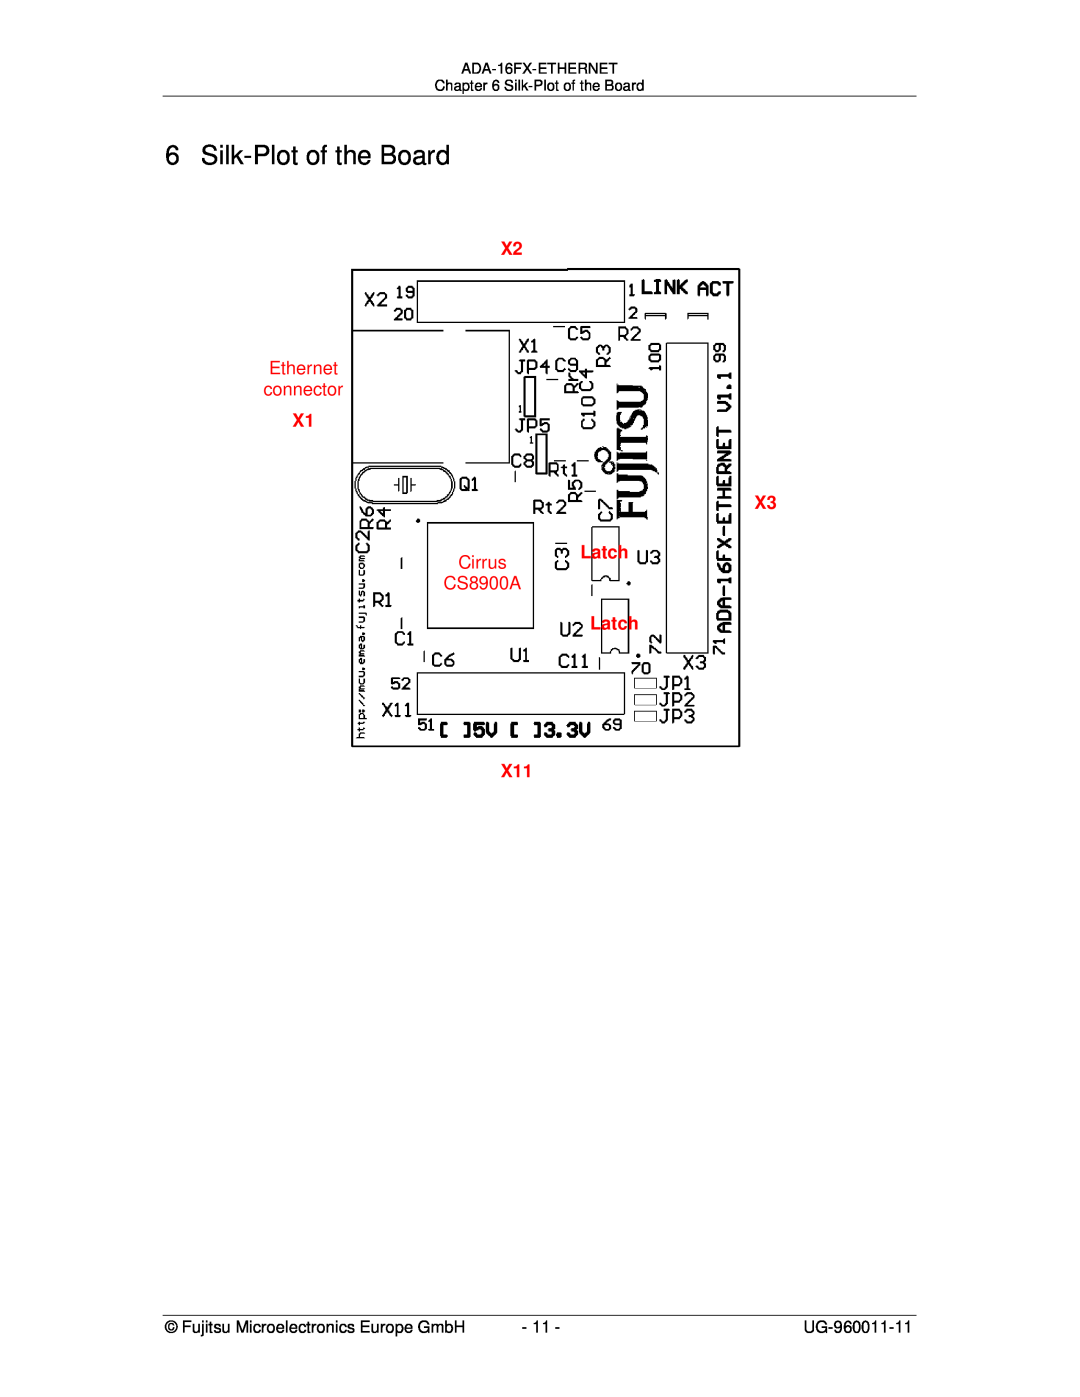 Fujitsu ADA-16FX manual Silk-Plot of the Board, Ethernet connector, Cirrus, X3 Latch, CS8900A 